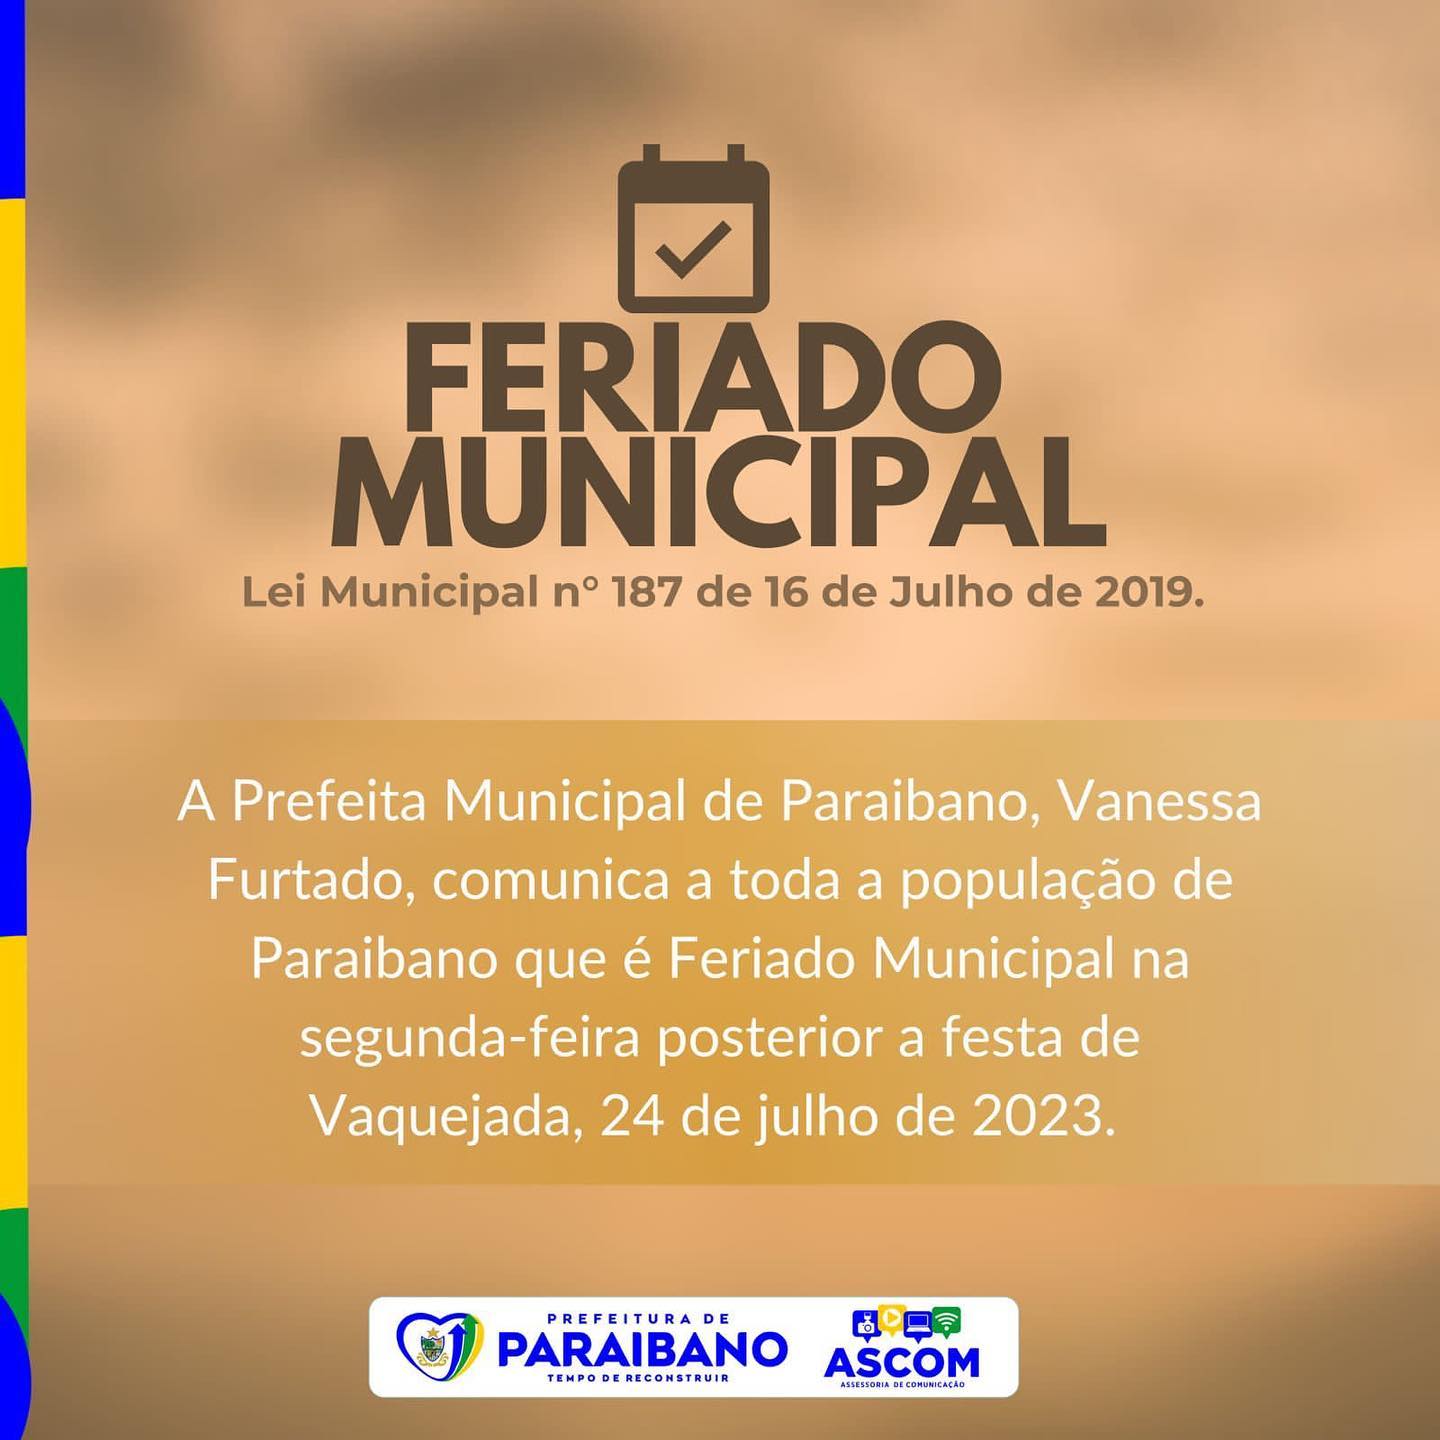 FERIADO MUNICIPAL APÓS A VAQUEJADA 2023